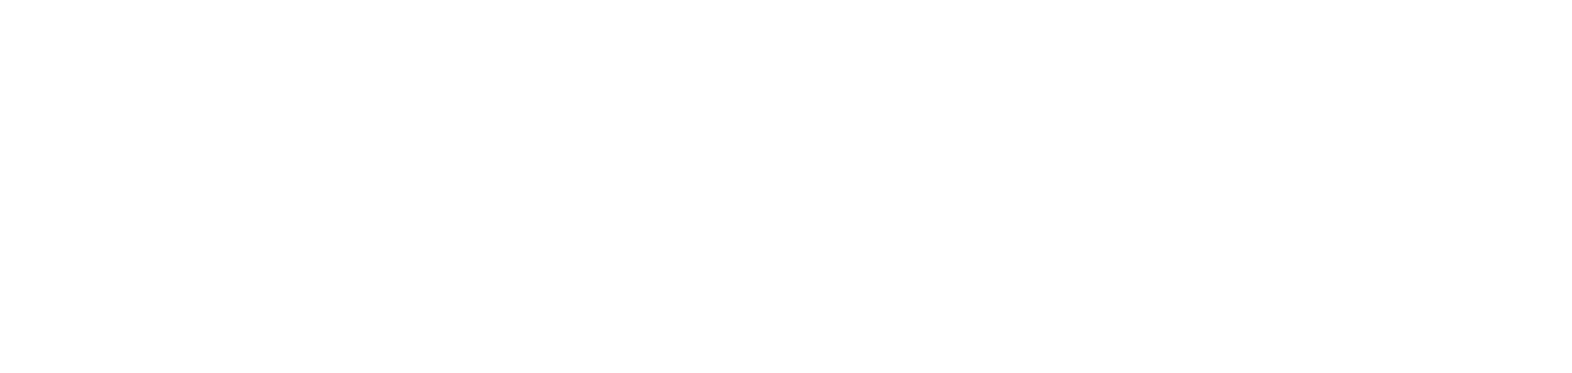 Electra Meccanica Logo groß für dunkle Hintergründe (transparentes PNG)